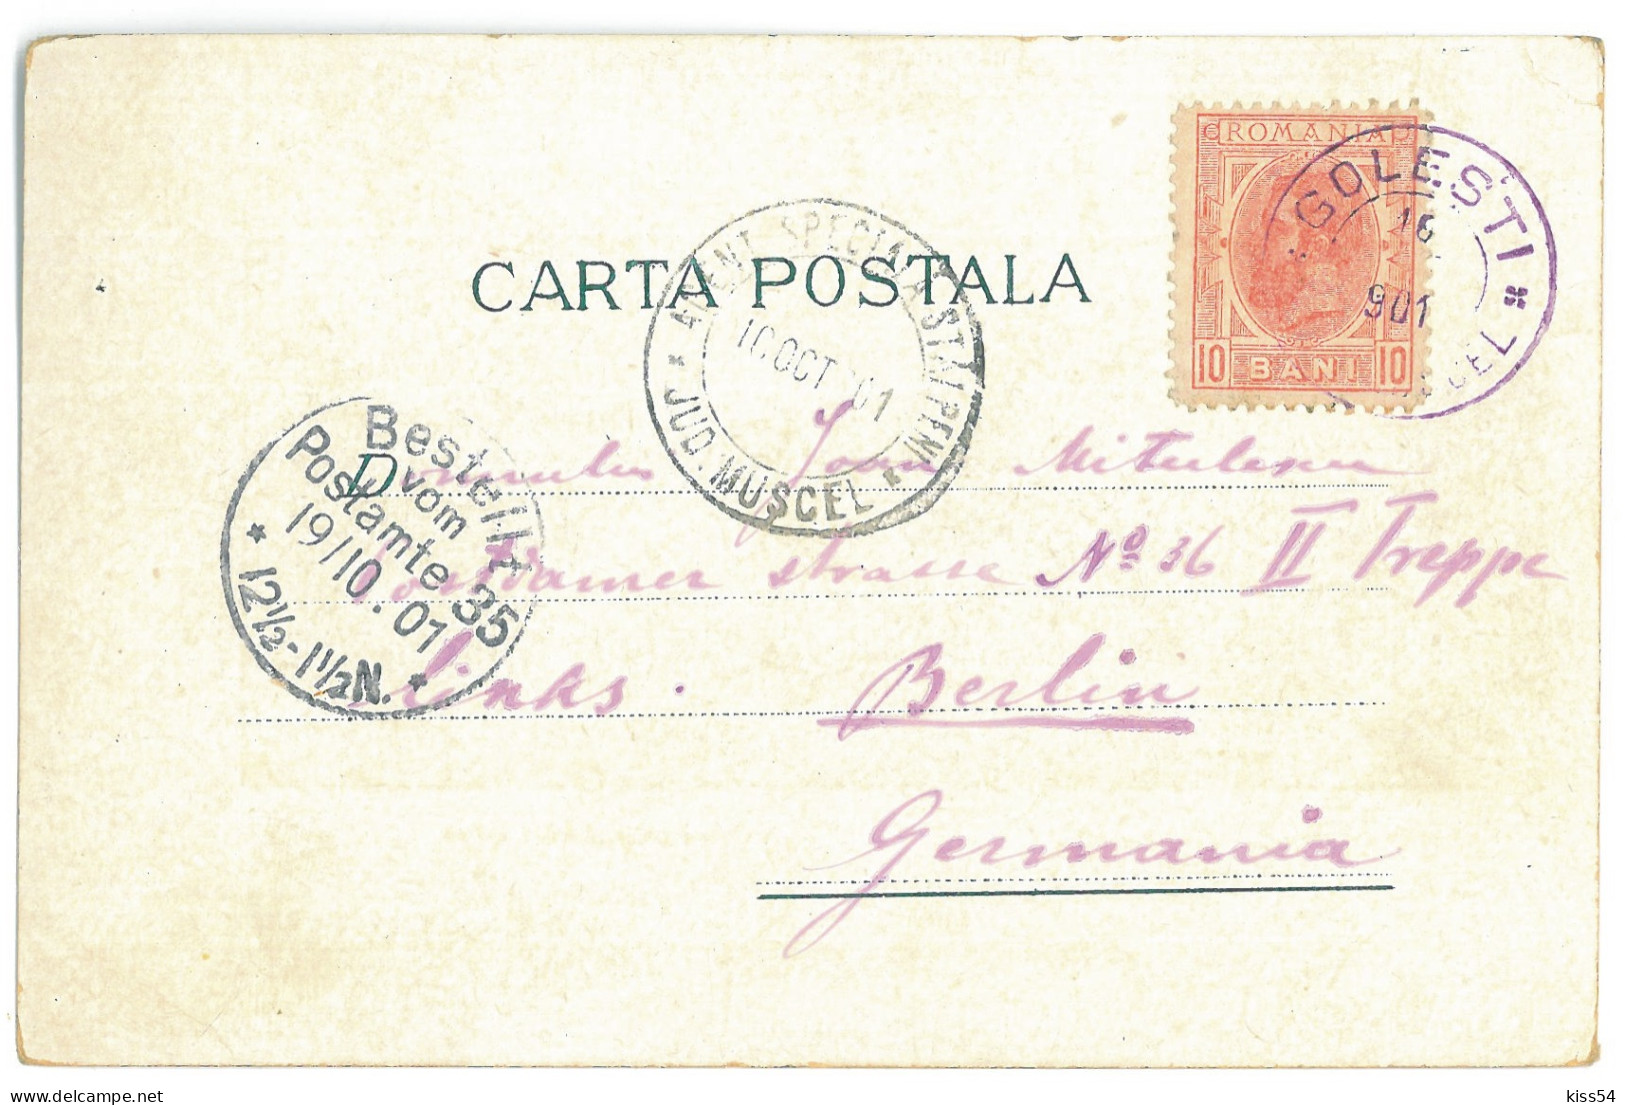 RO 83 - 25085 RUCAR, Arges, Panorama, Litho, Romania - Old Postcard - Used - 1901 - Romania